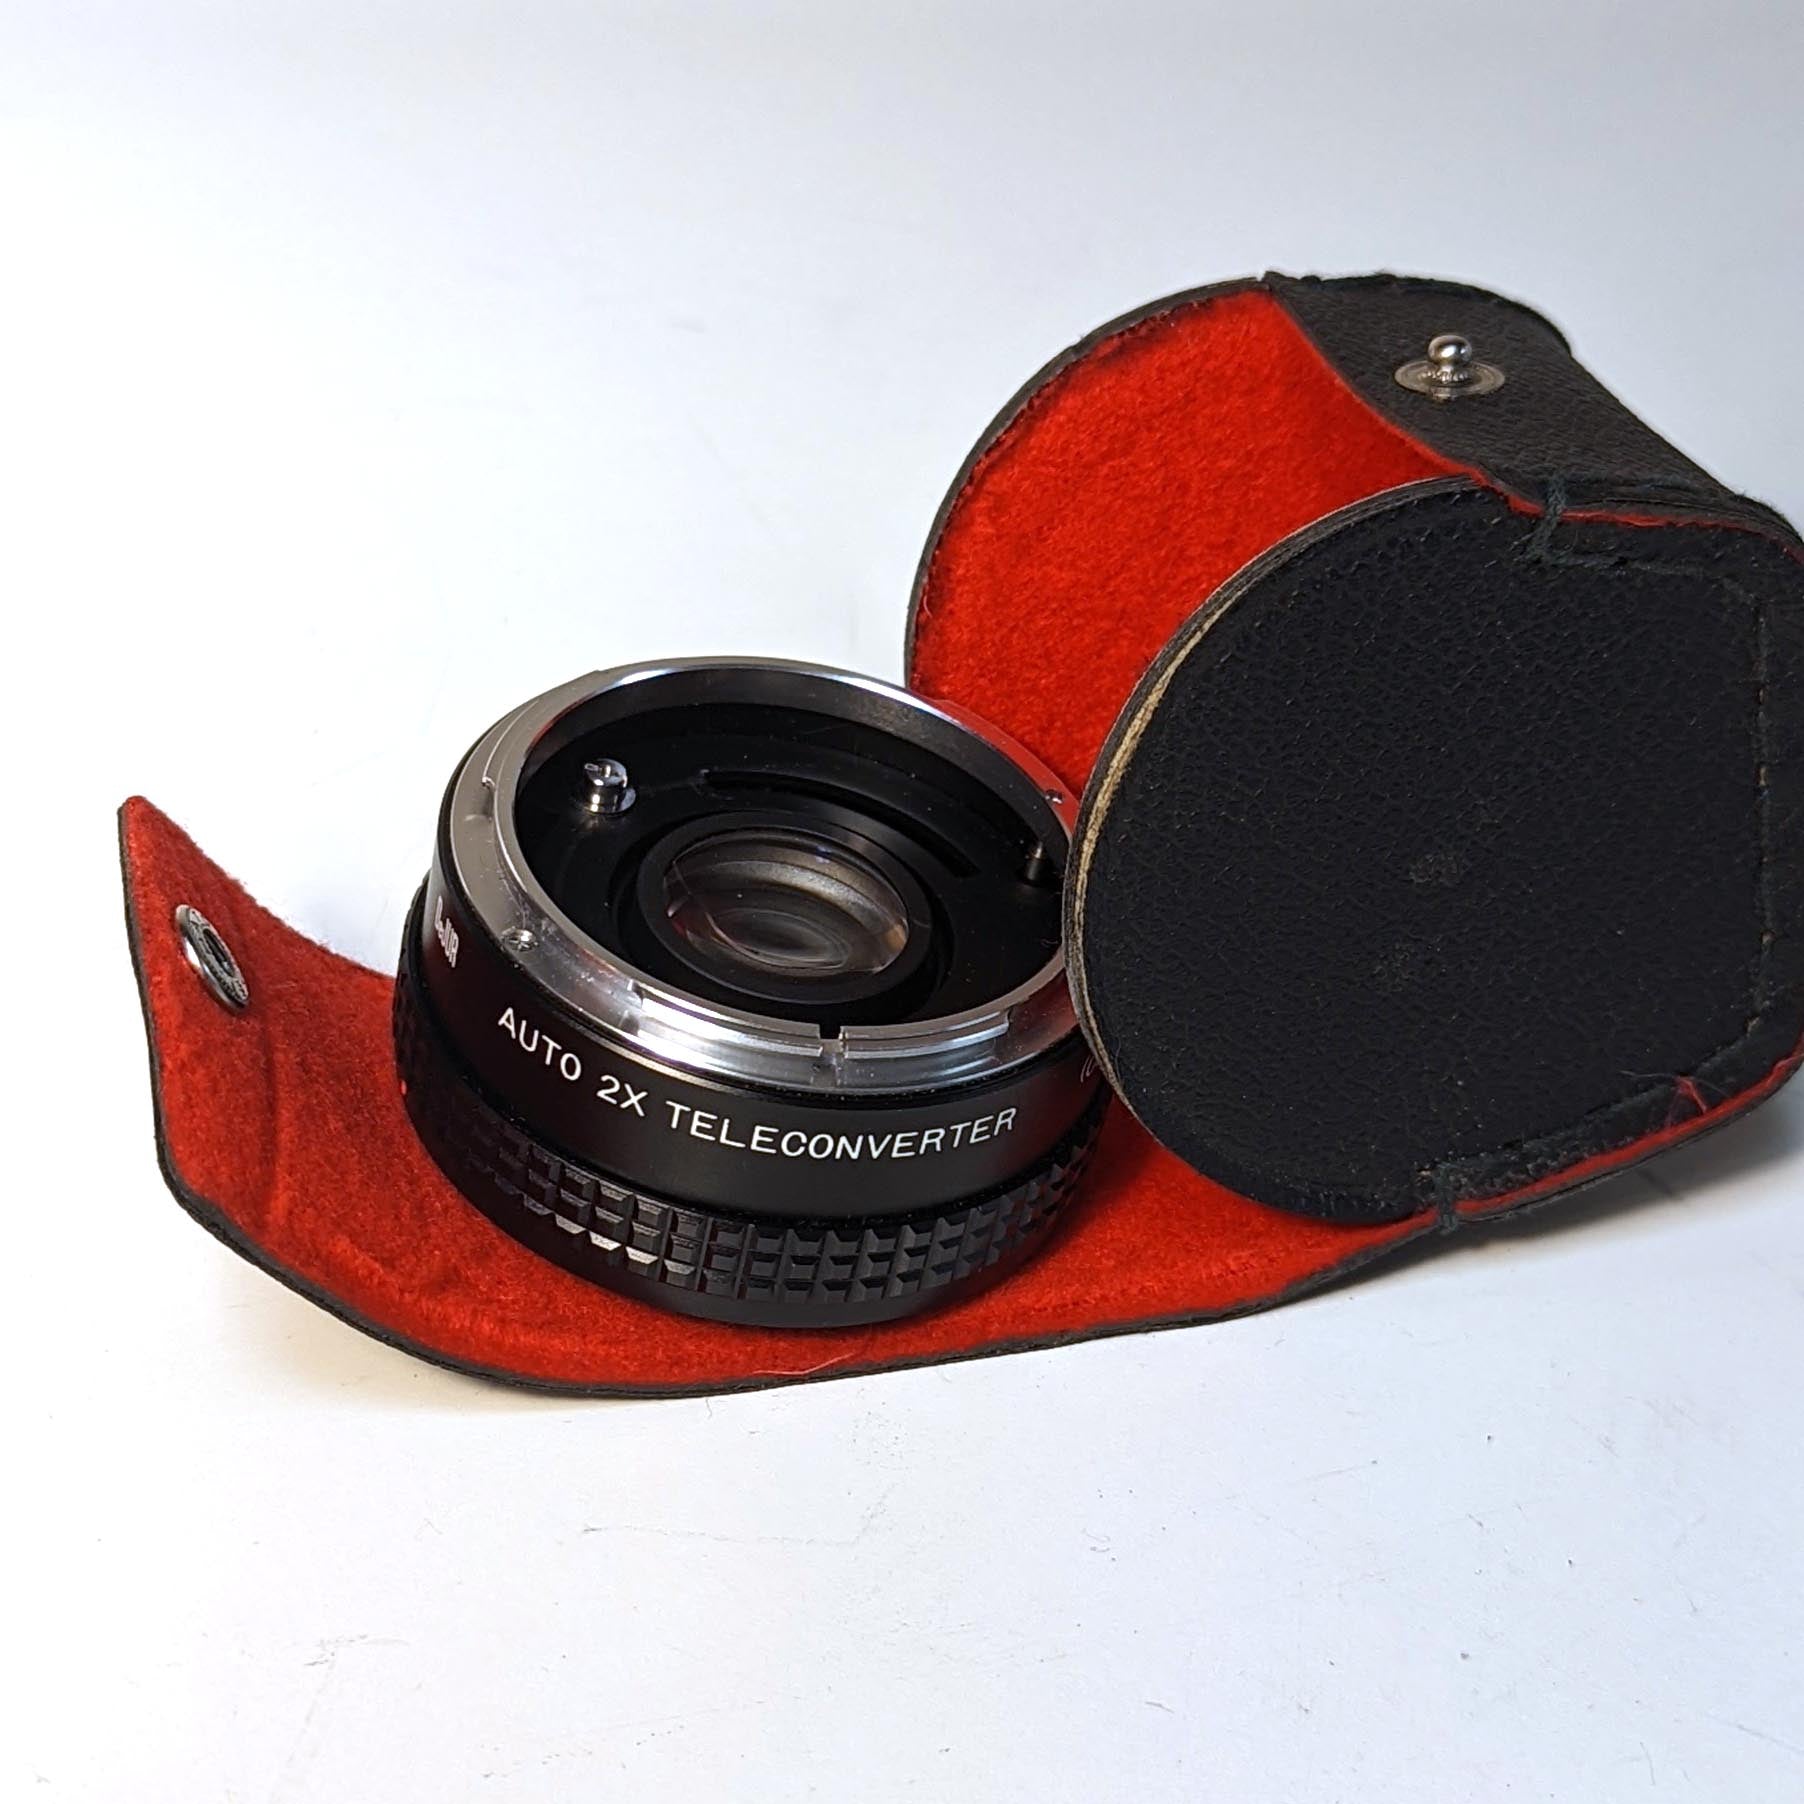 Vintage DEJUR AUTO 2X Teleconverter CA Lens Made in JAPAN